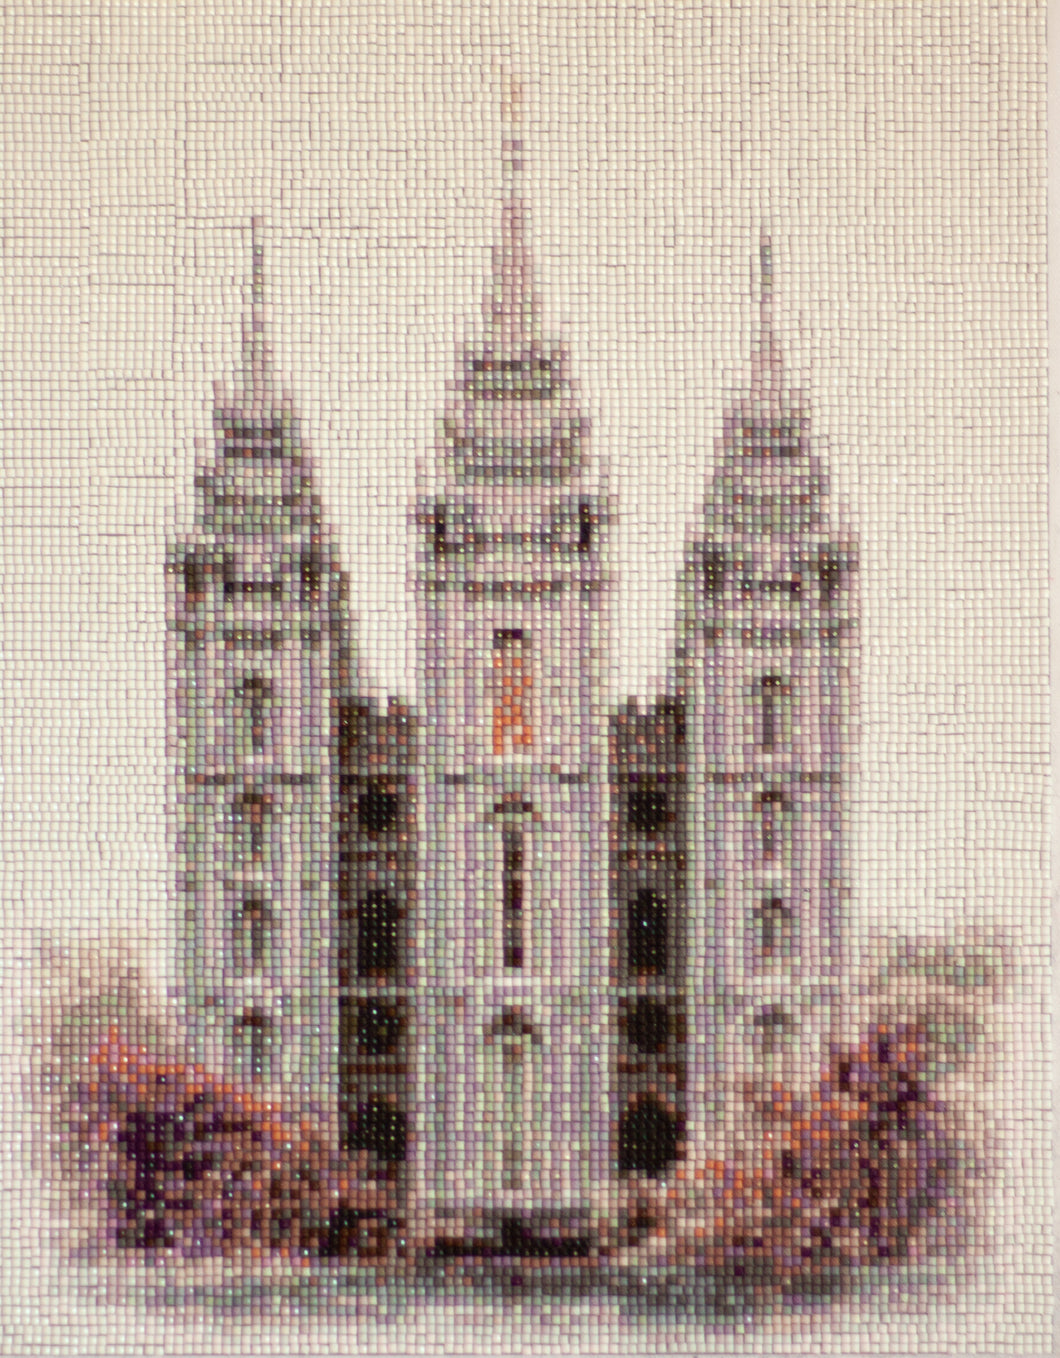 Celestial Salt Lake City Temple | Diamond Painting